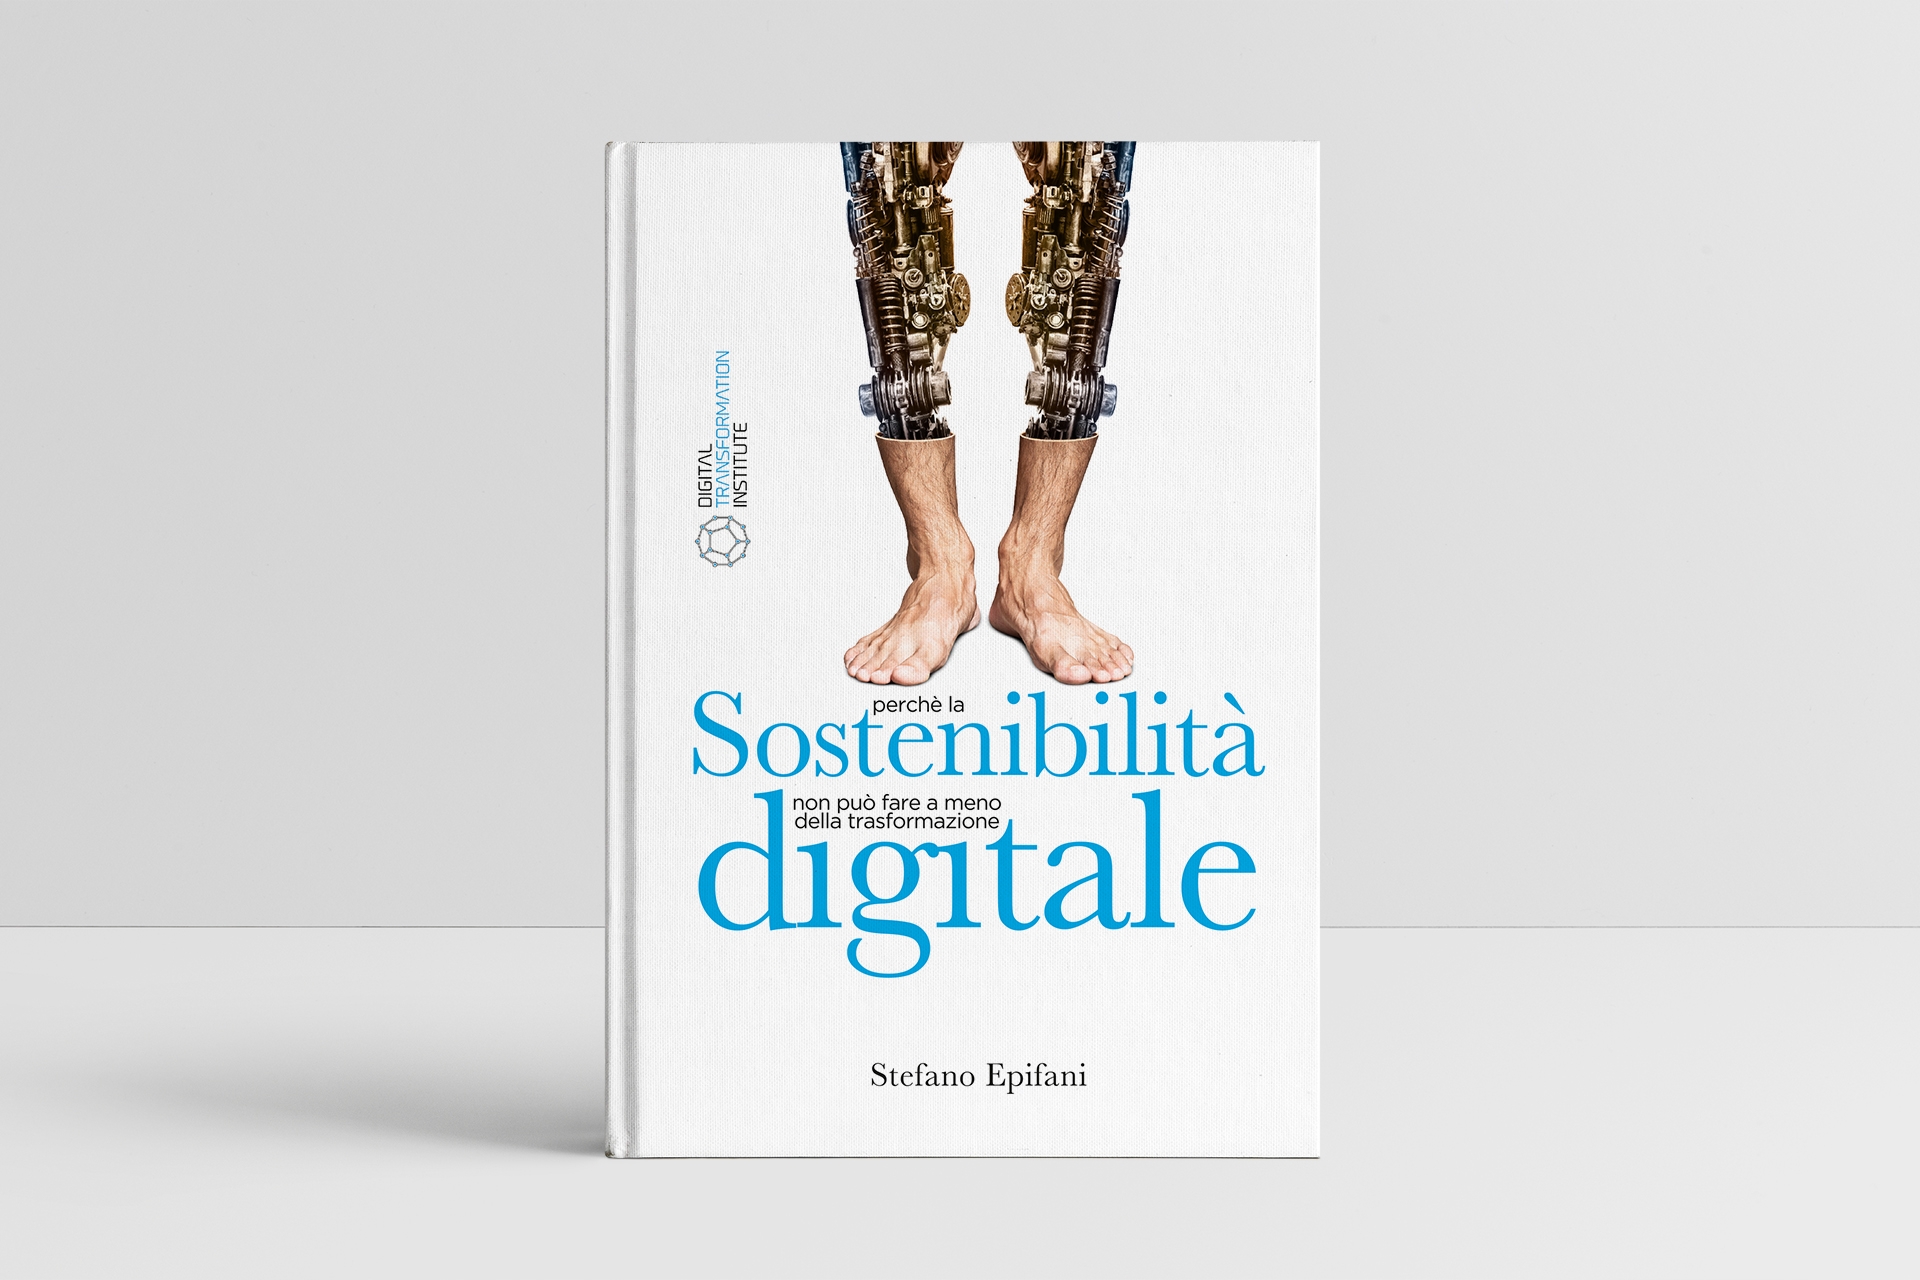 Stefano Epifani: the book "Digital Sustainability: why sustainability cannot do without digital transformation" by Stefano Epifani